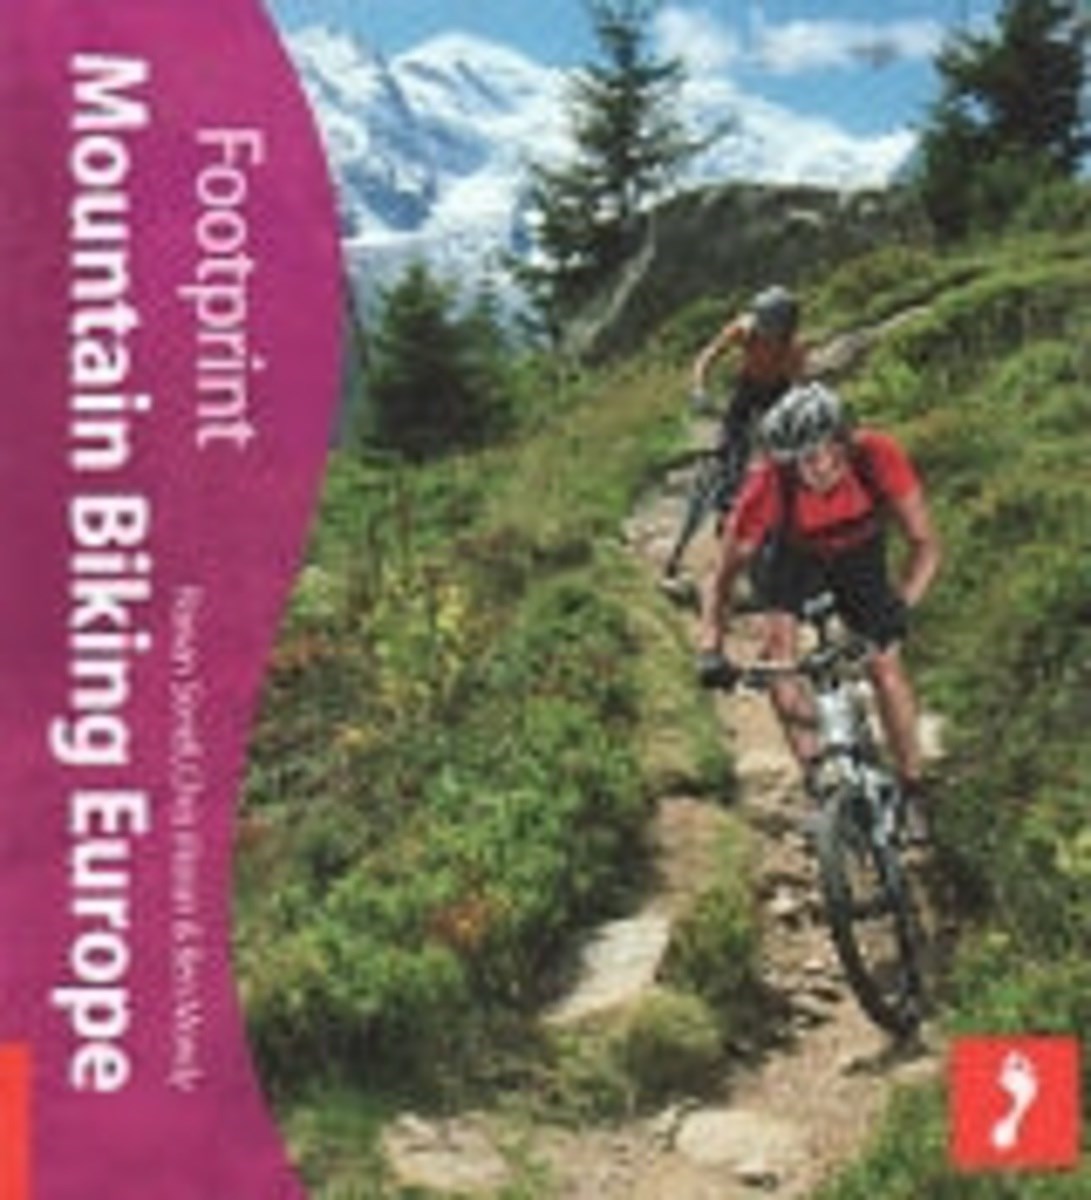 Books Mountain Biking Europe product image